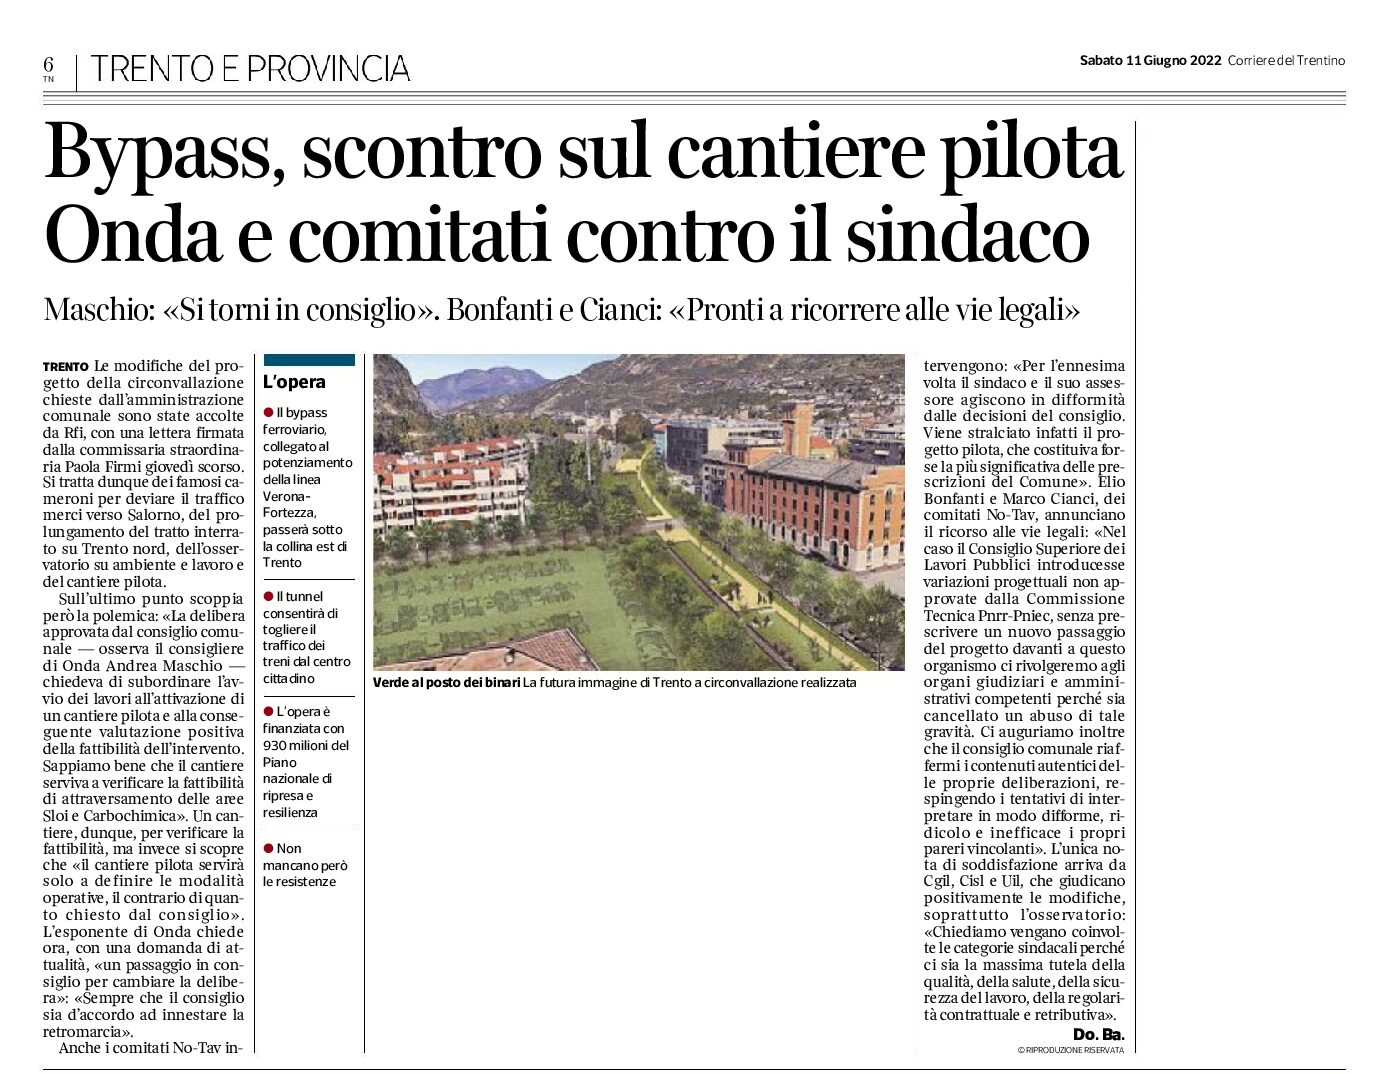 Trento, bypass: scontro sul cantiere pilota